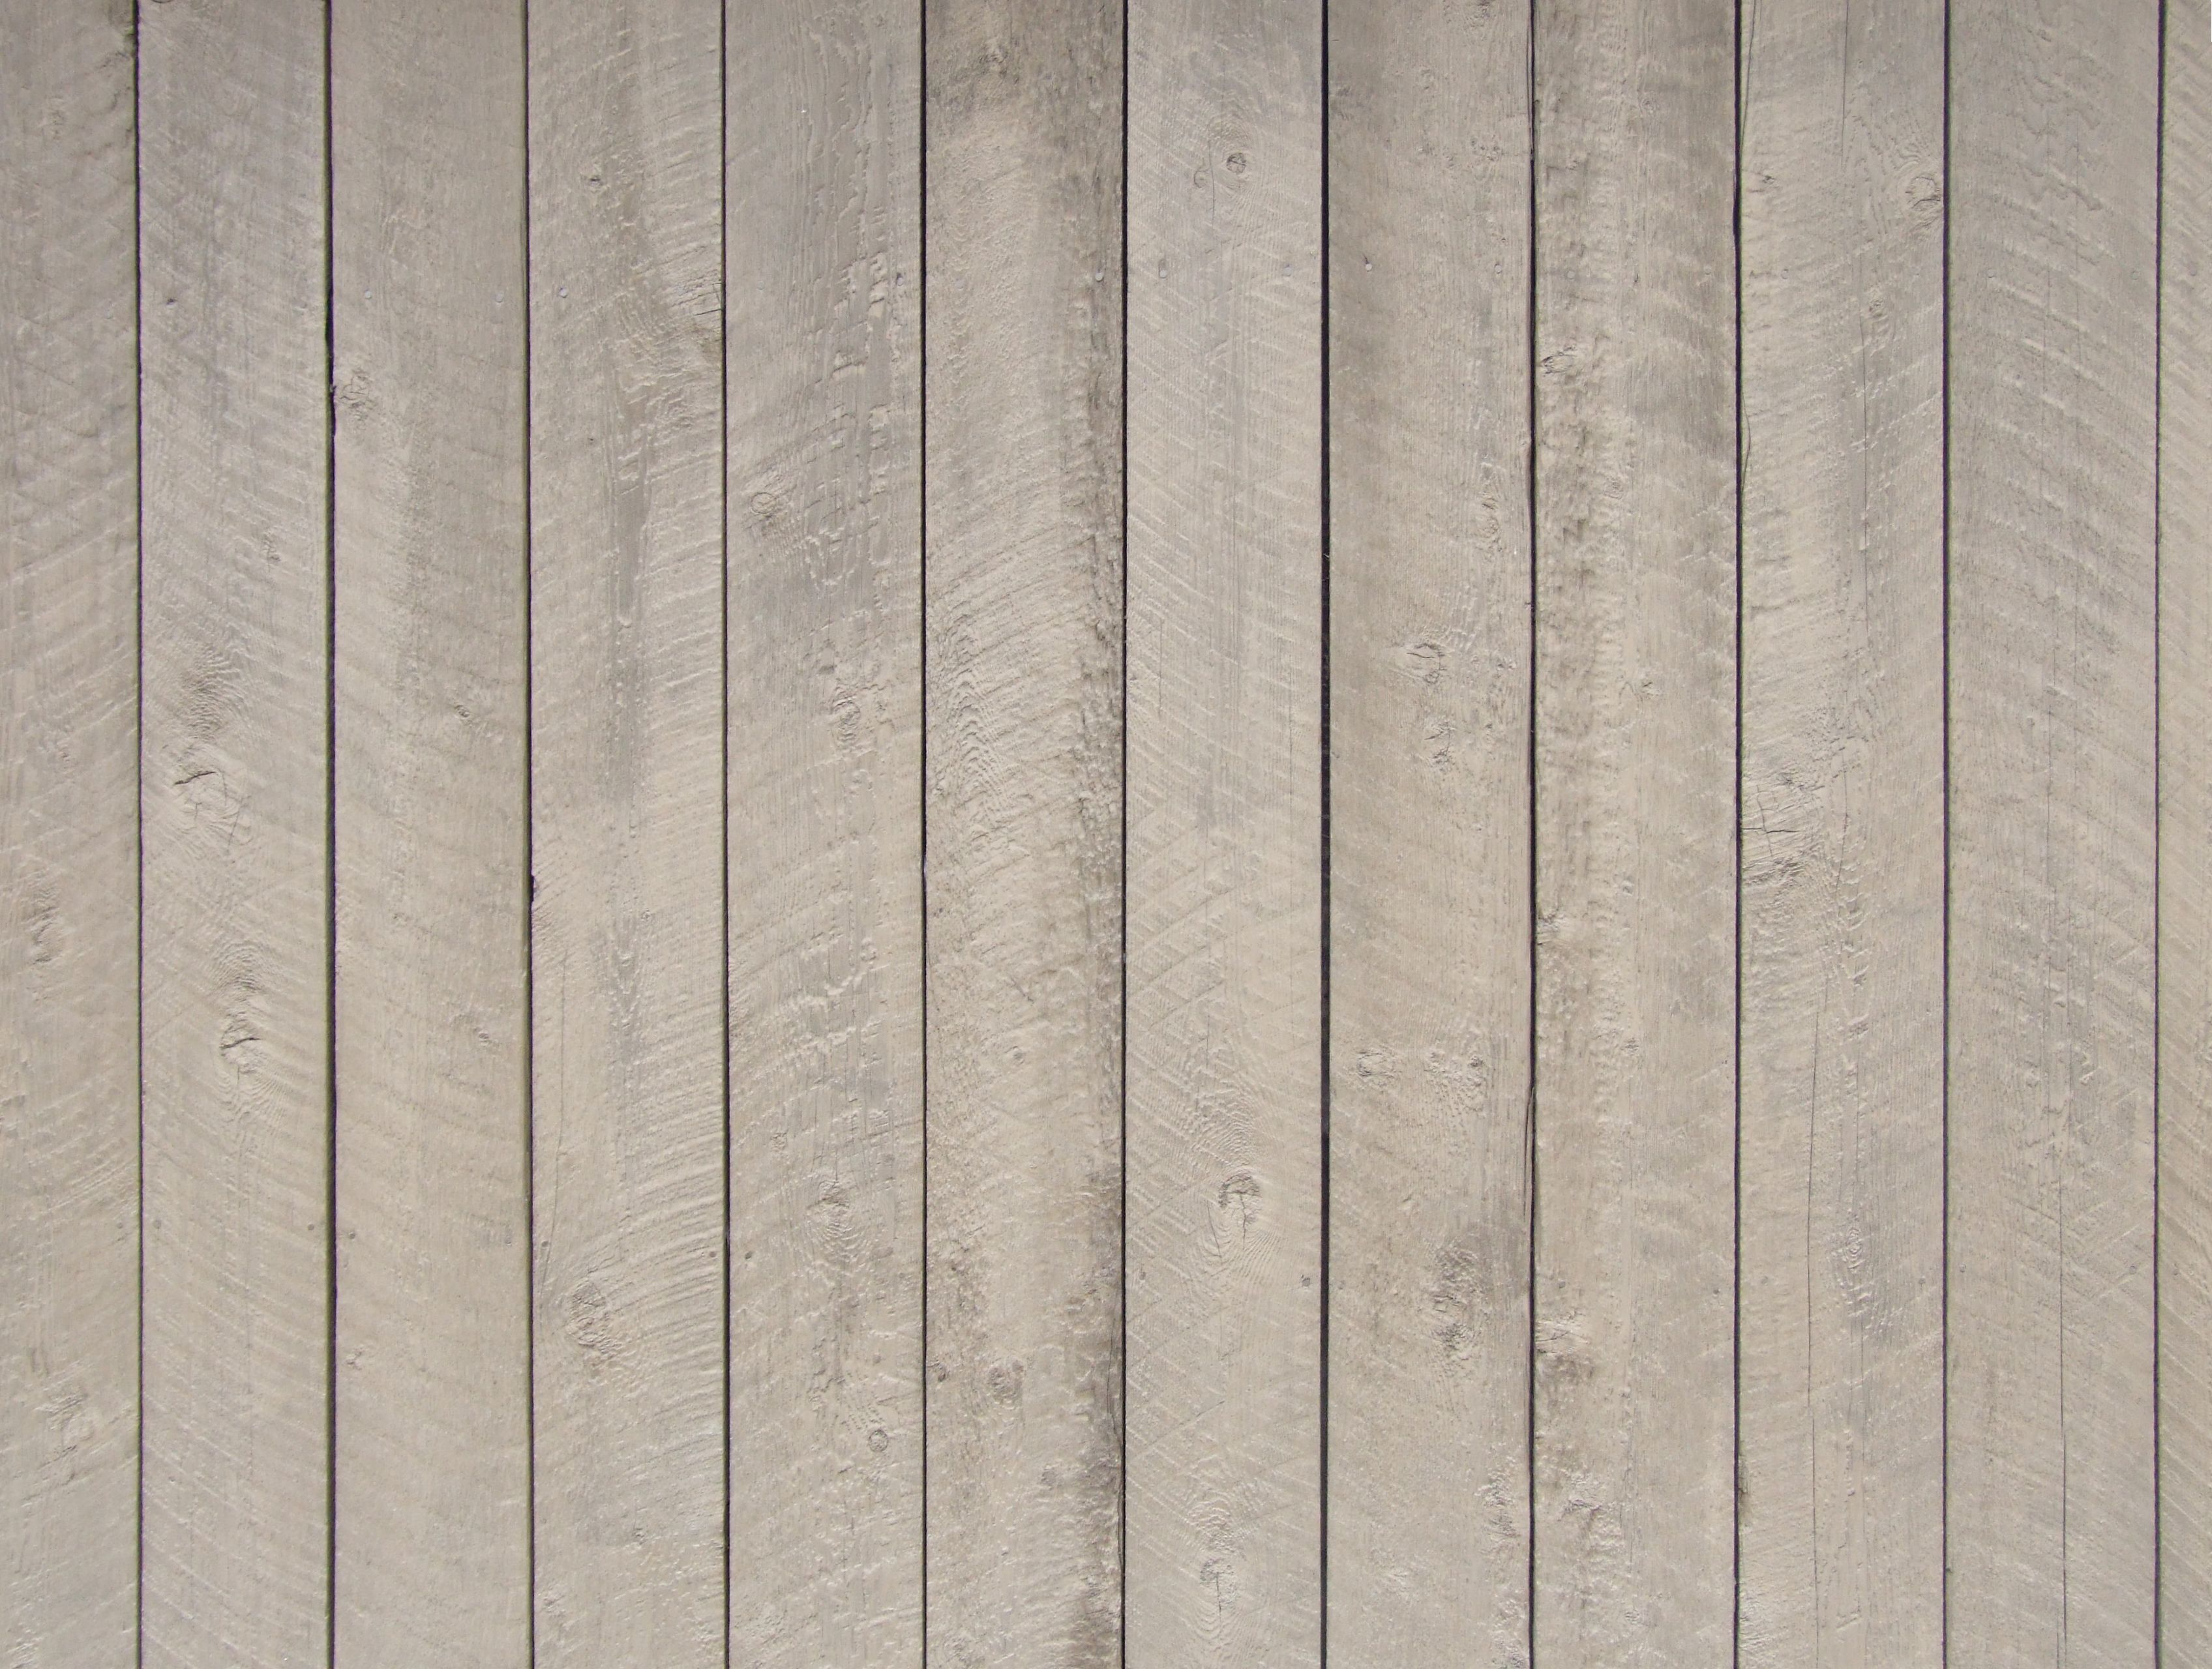 Wooden Background Eighty-nine | Photo Texture & Background